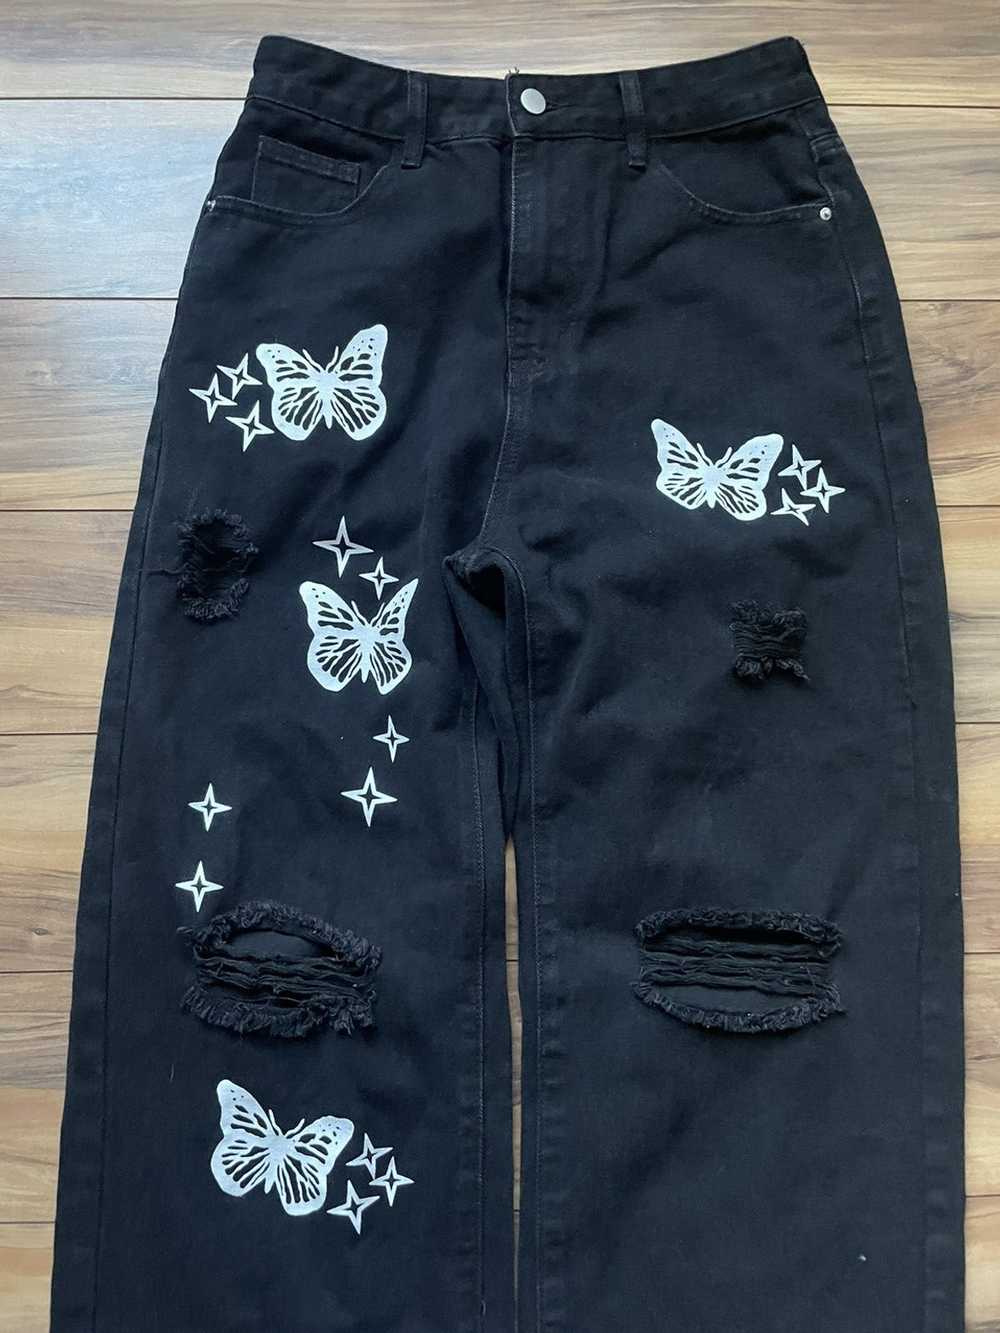 Shein Butterflies shein black jeans - image 3